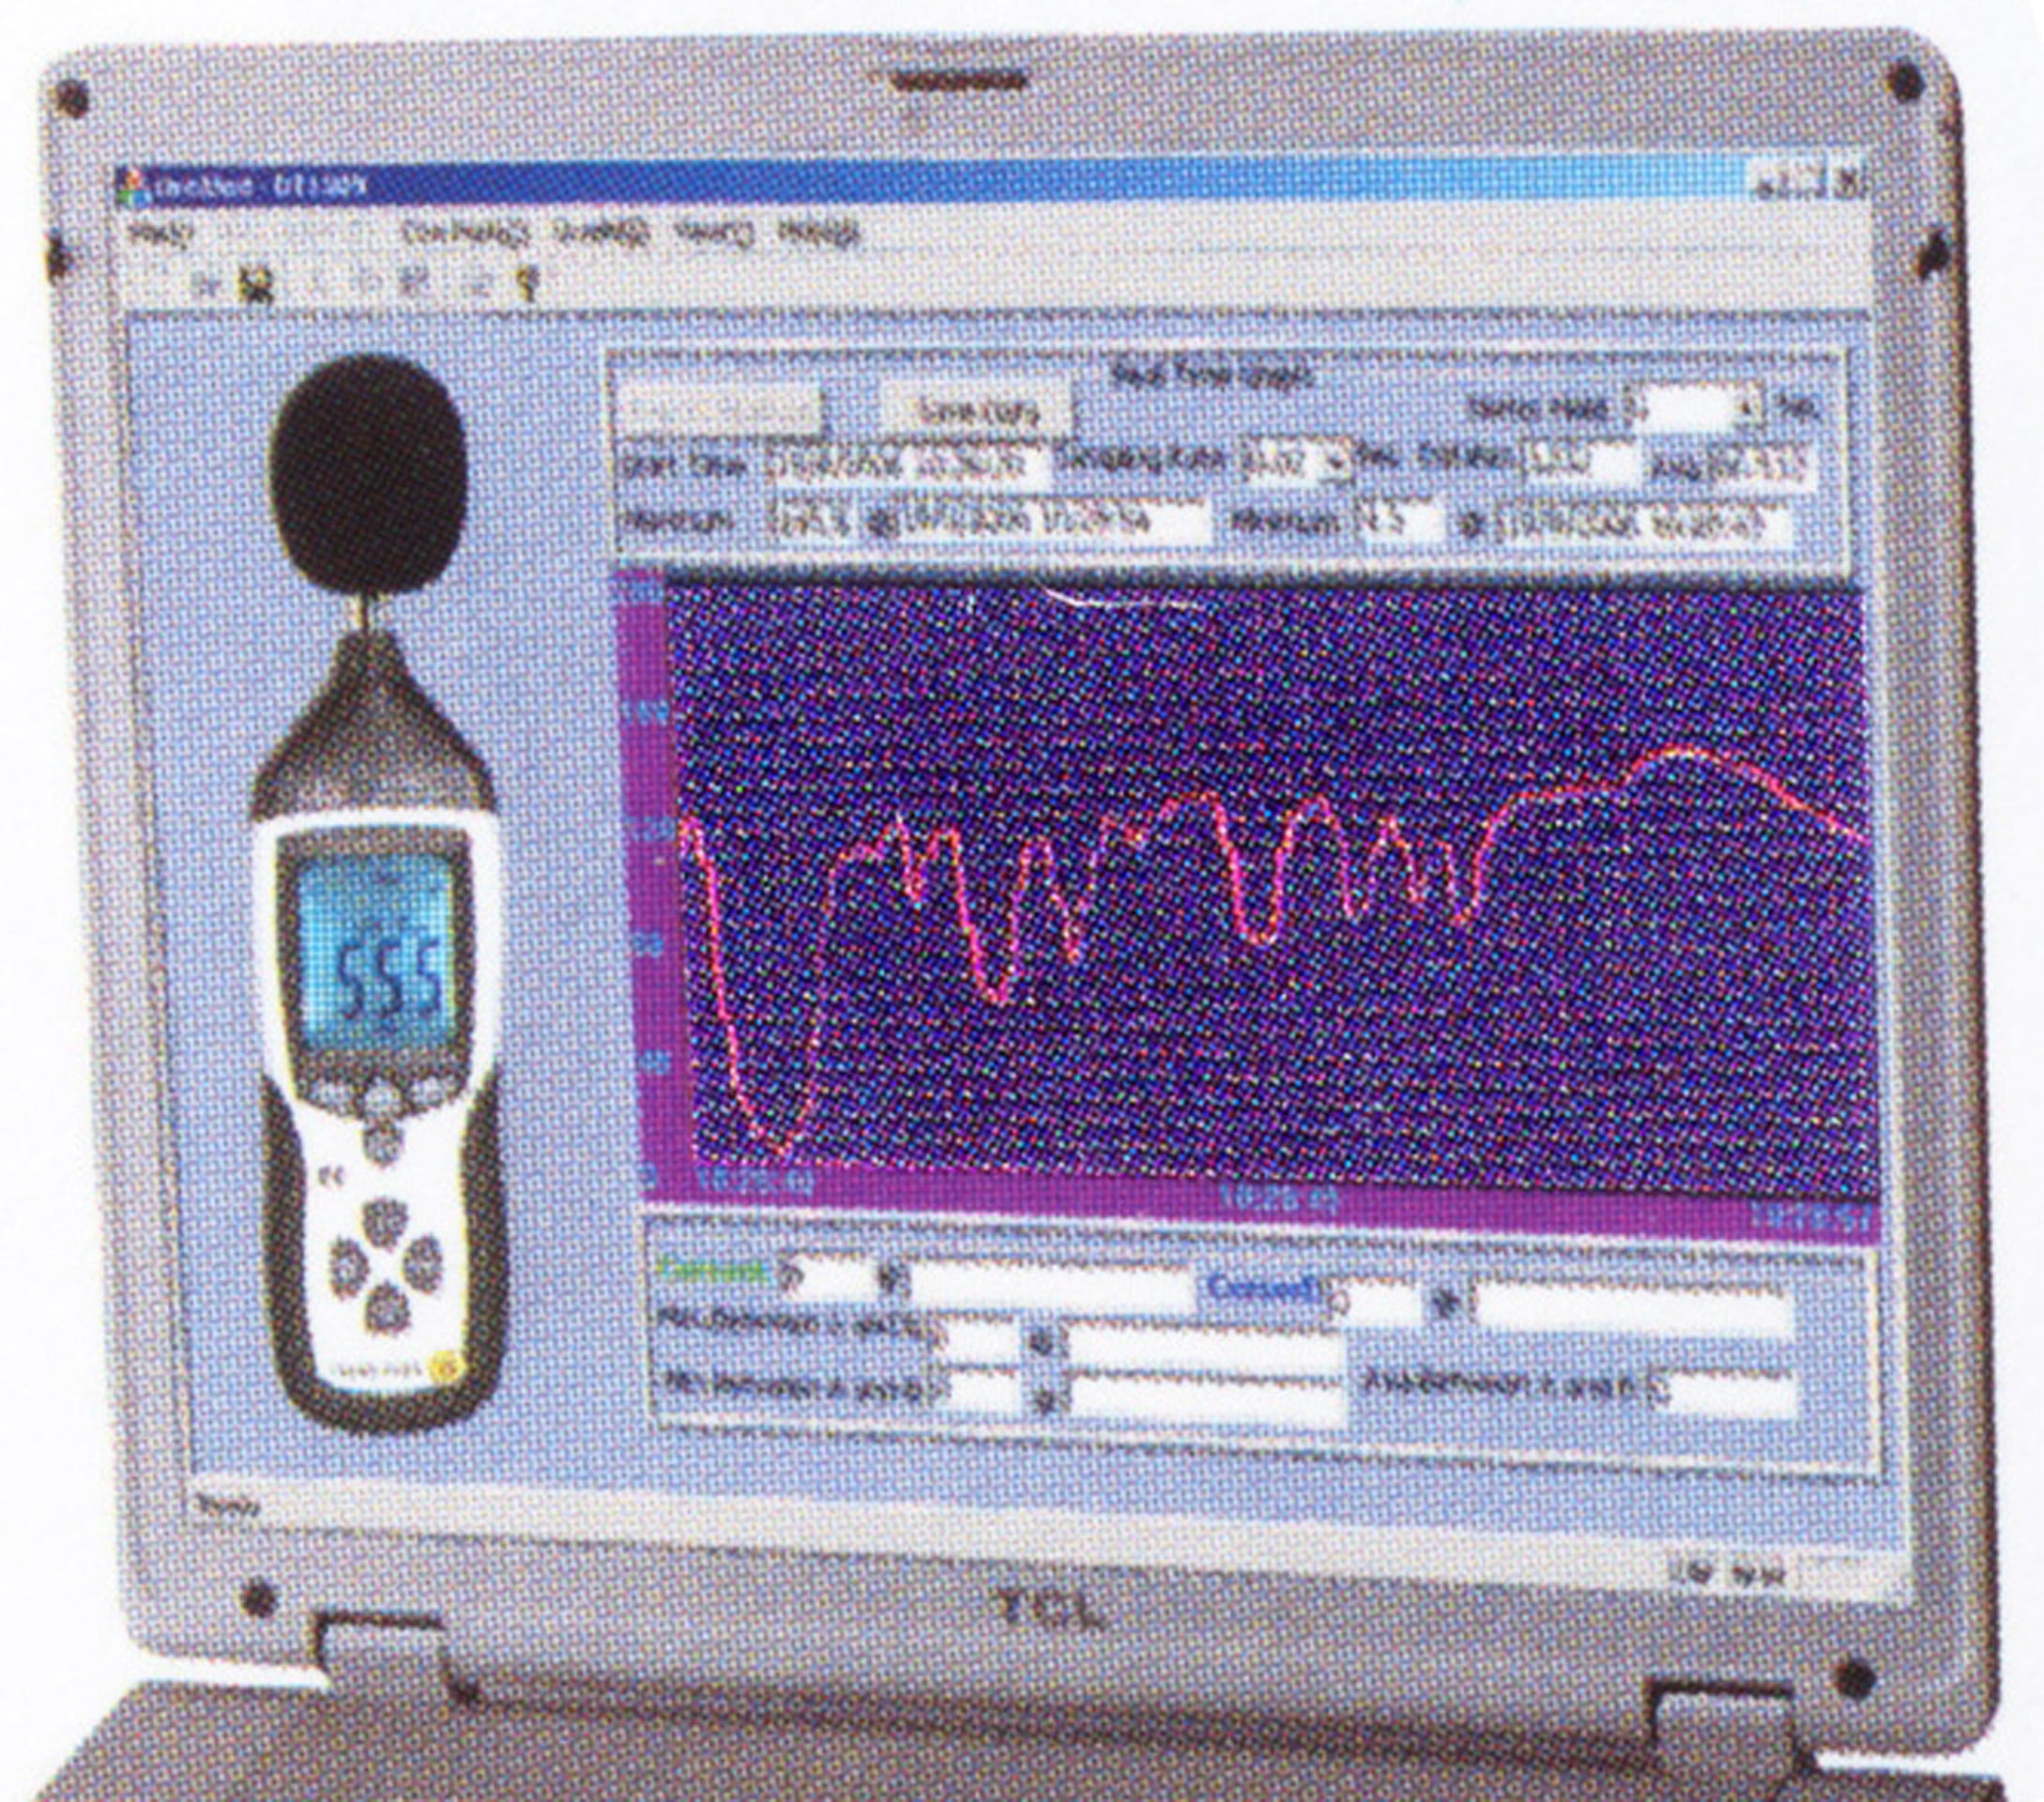 Decibelímetro Digital Data Logger - DT-8852 - CEM